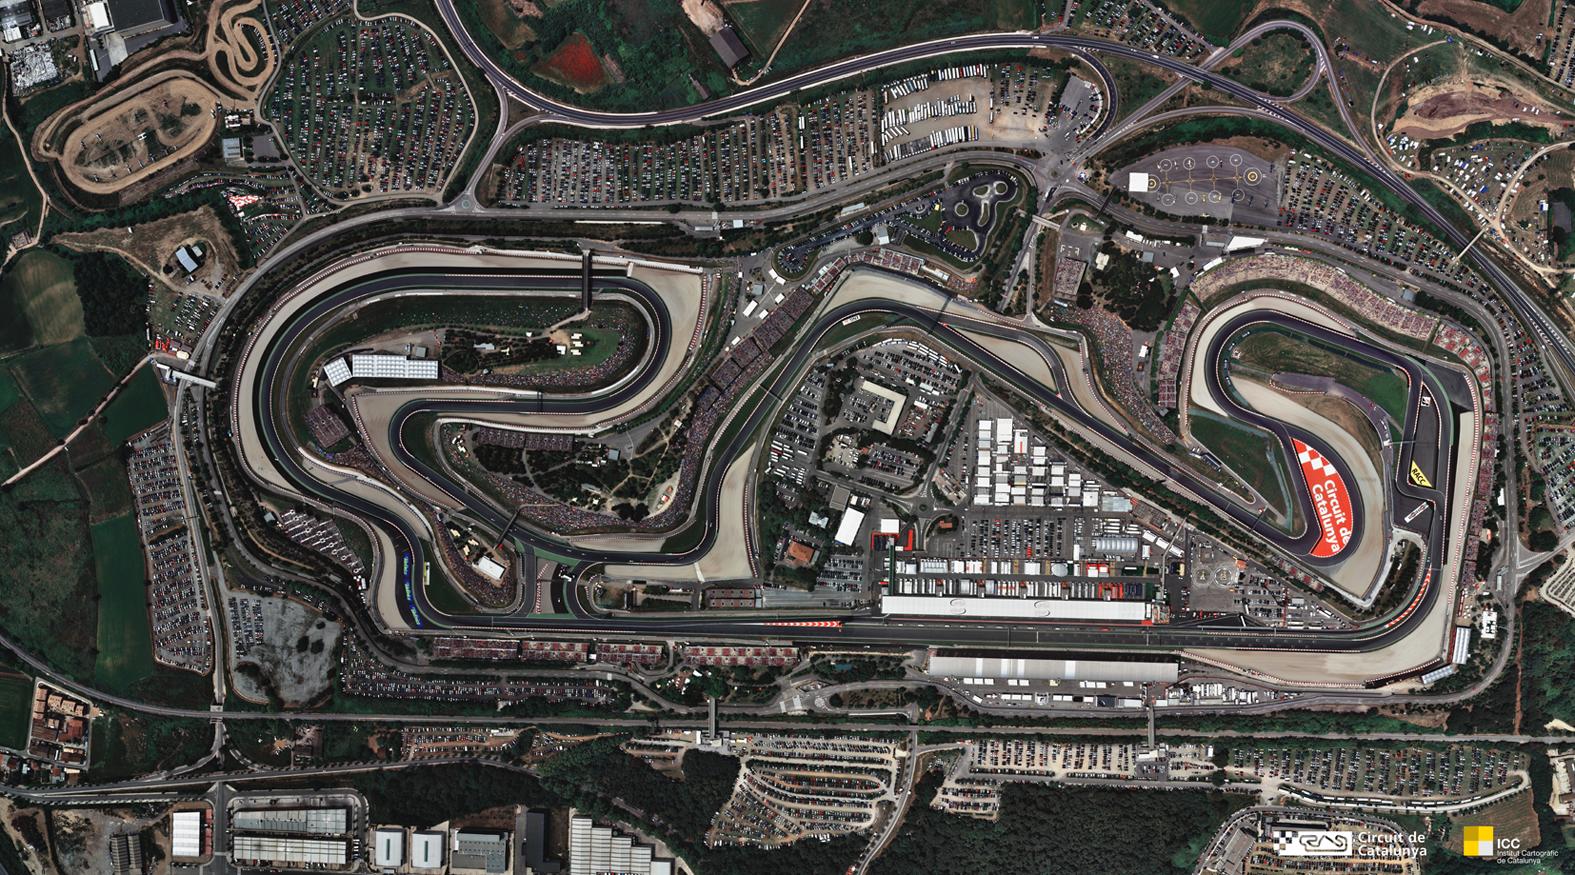 Circuit de Catalunya any 2009 